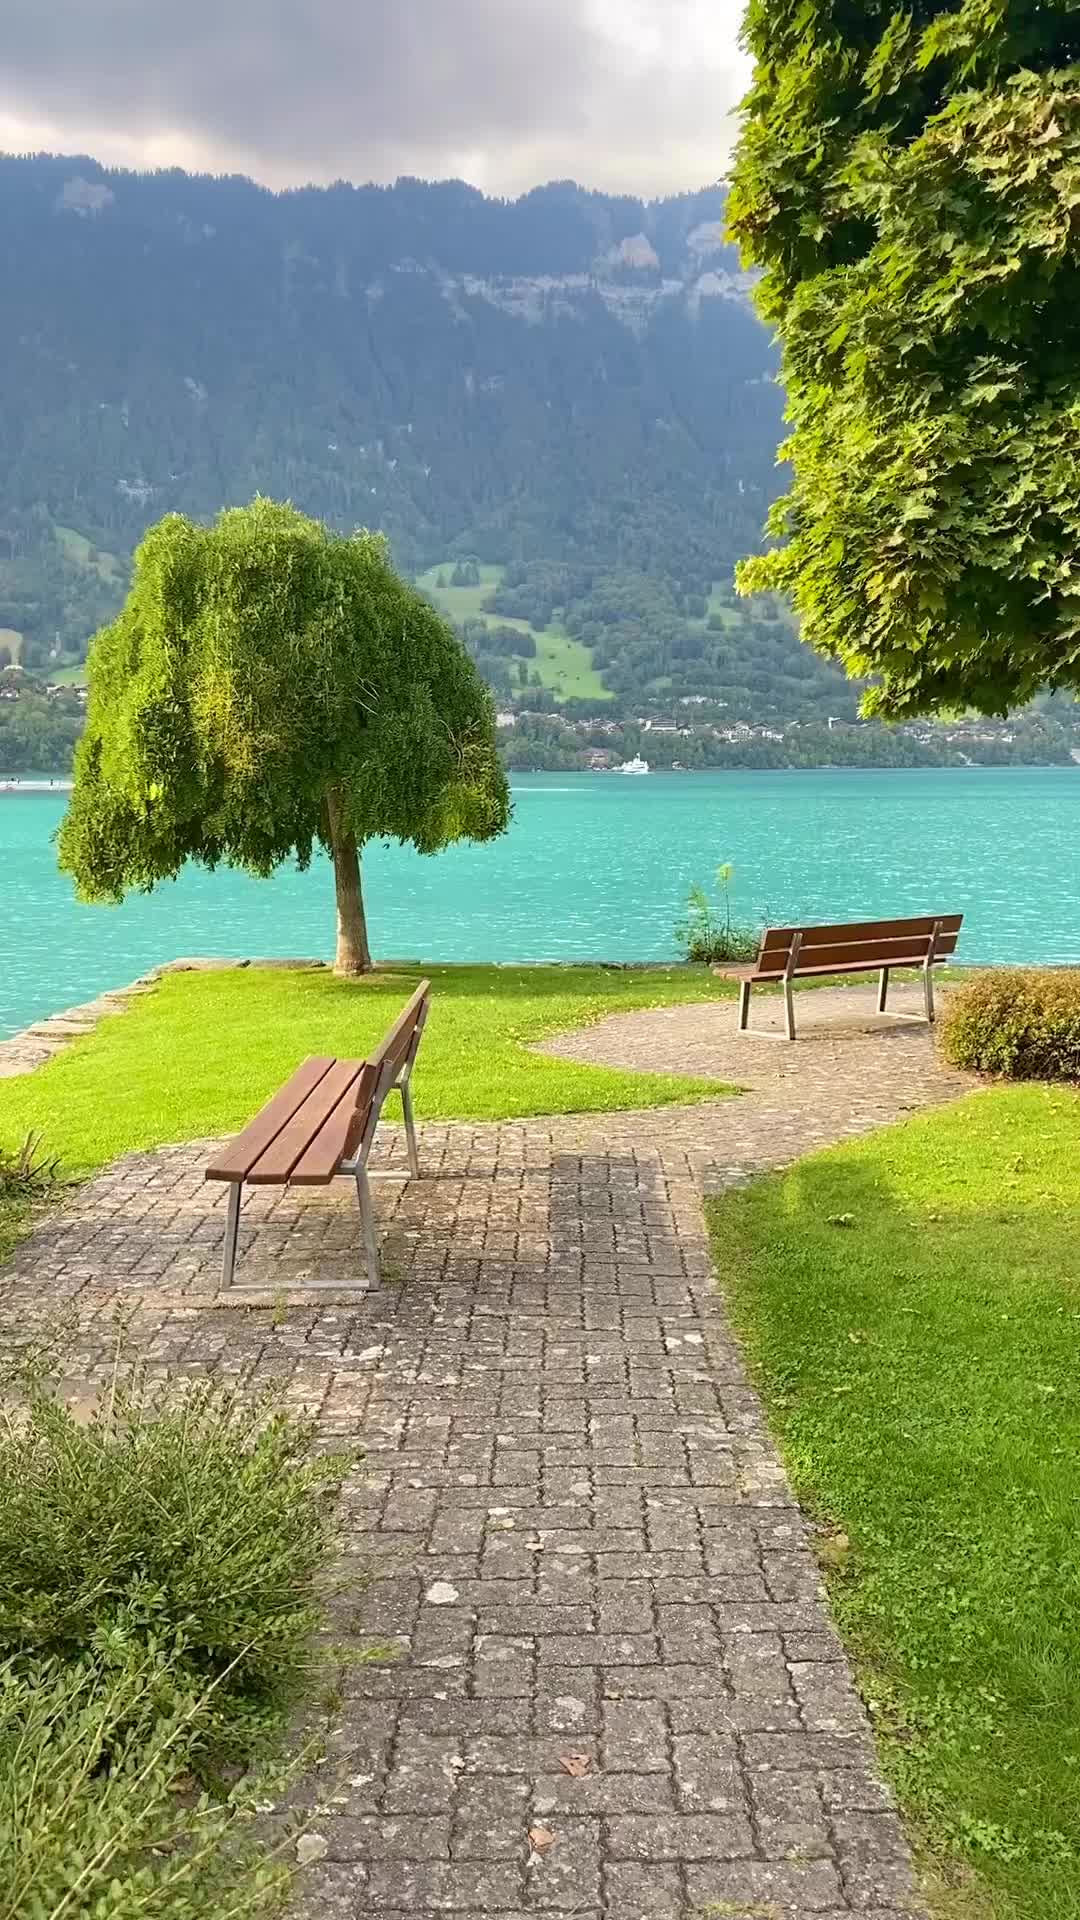 Stunning Lakeside Views of Lake Brienz, Switzerland